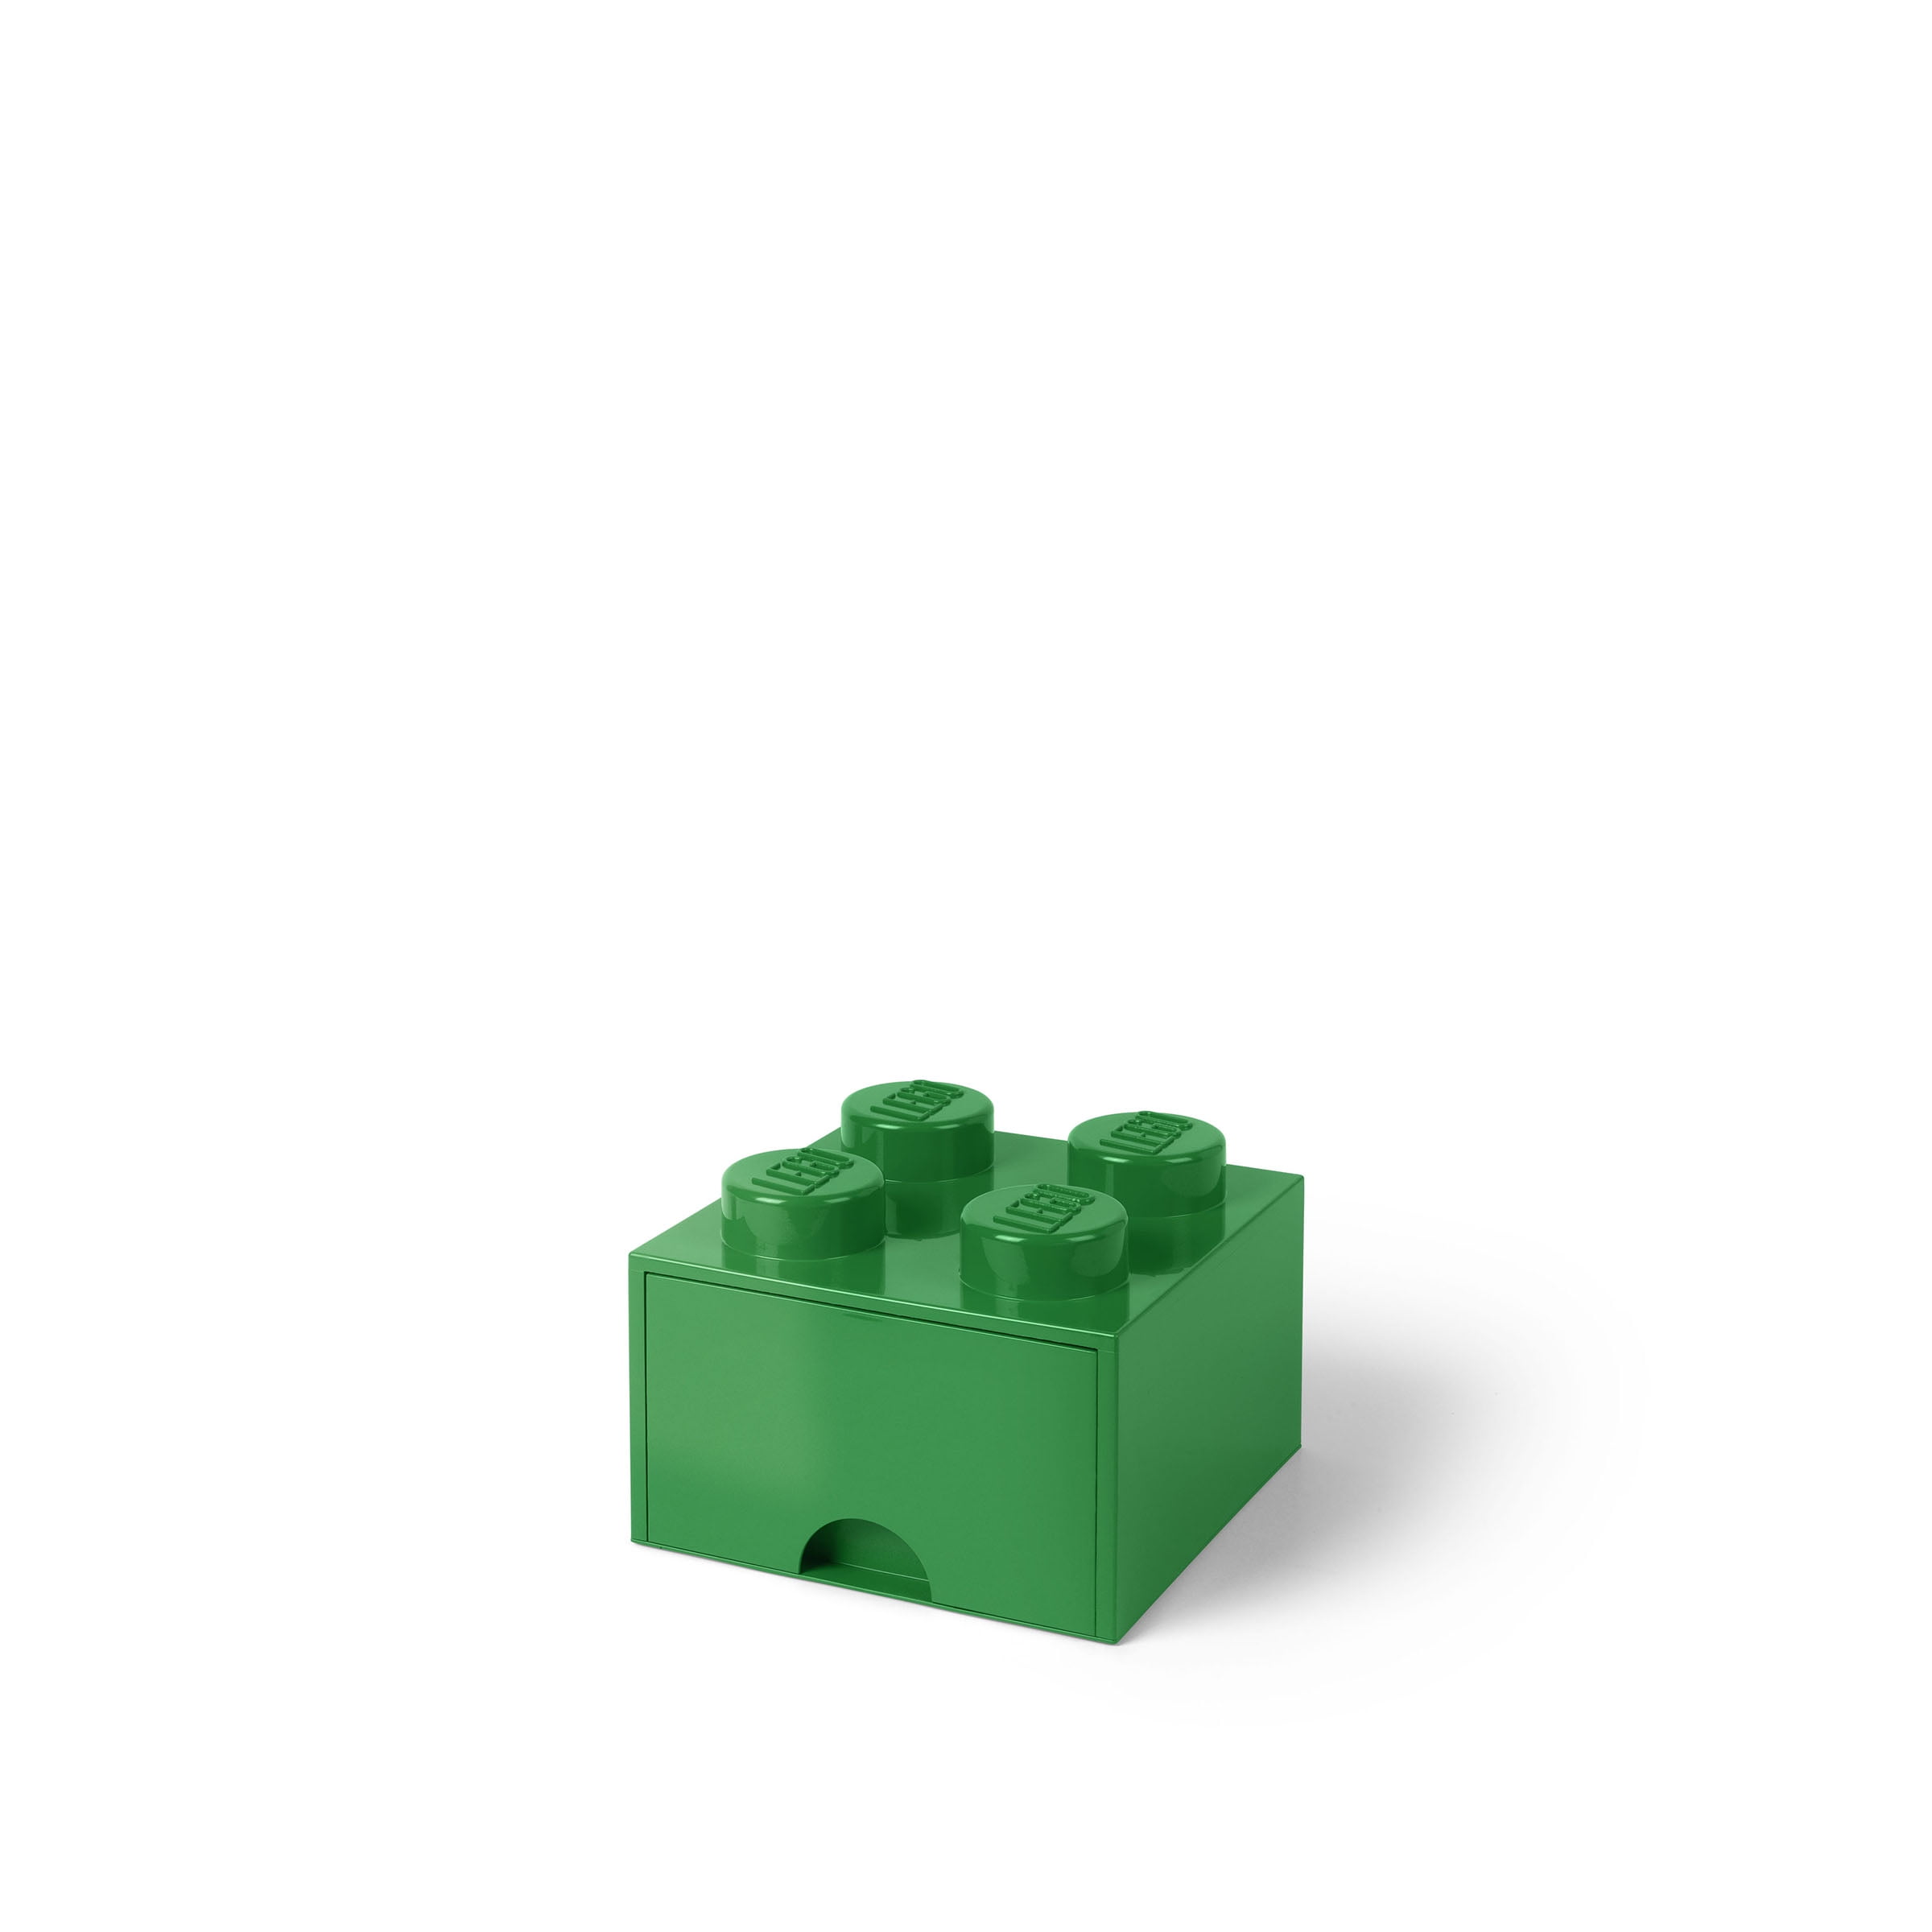 LEGO Storage Brick Multi Pack Bright Red/Bright Blue/Bright Yellow/White FlatRIver-DropShip 40150601 4 Piece 